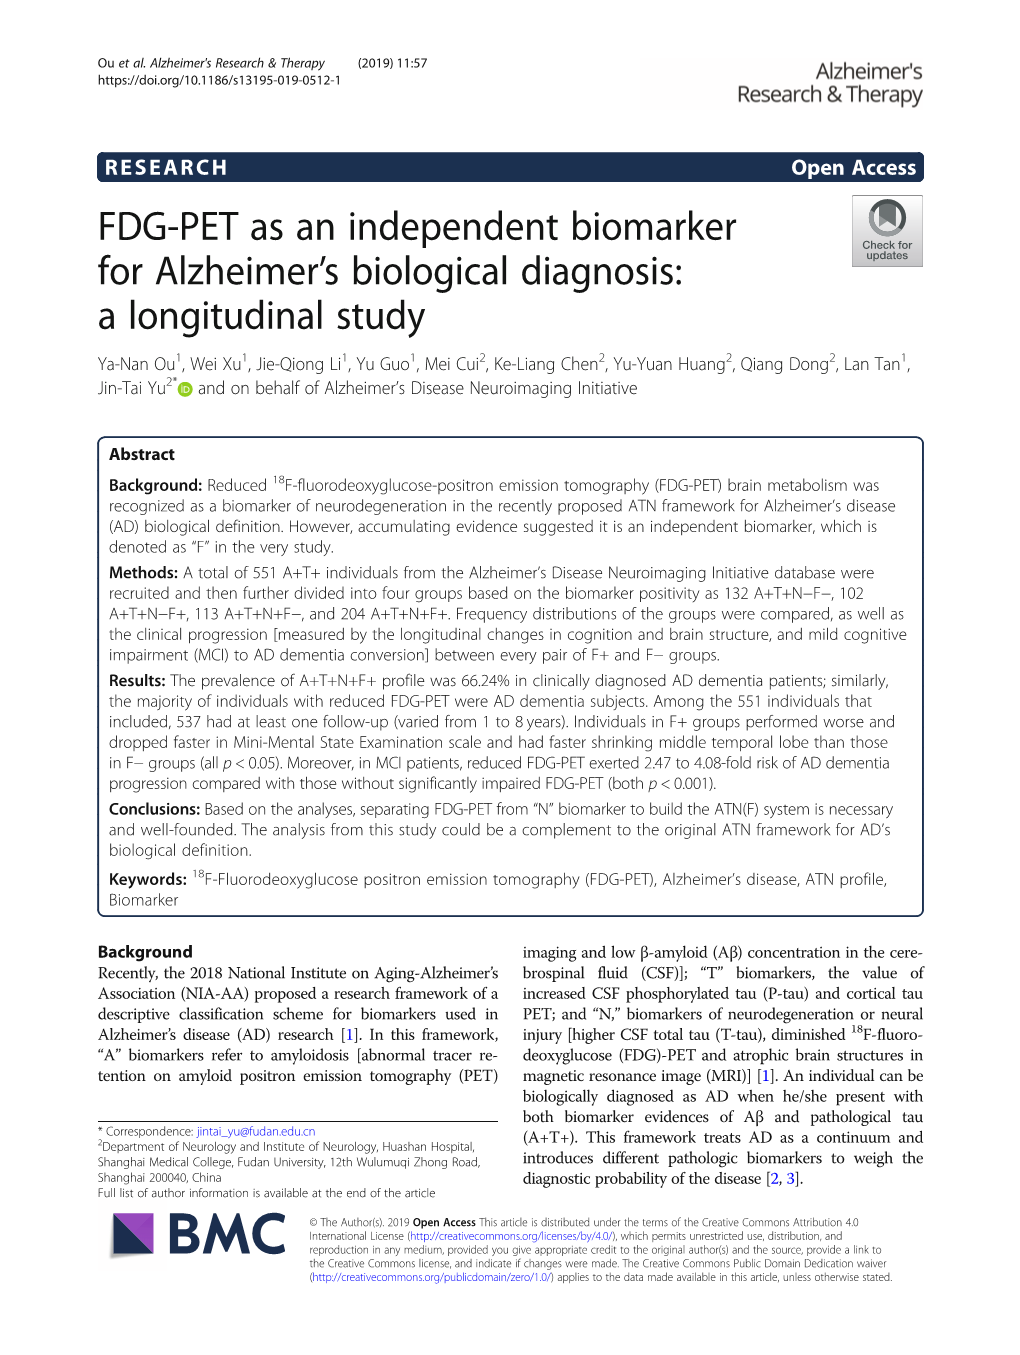 FDG-PET As an Independent Biomarker for Alzheimer's Biological